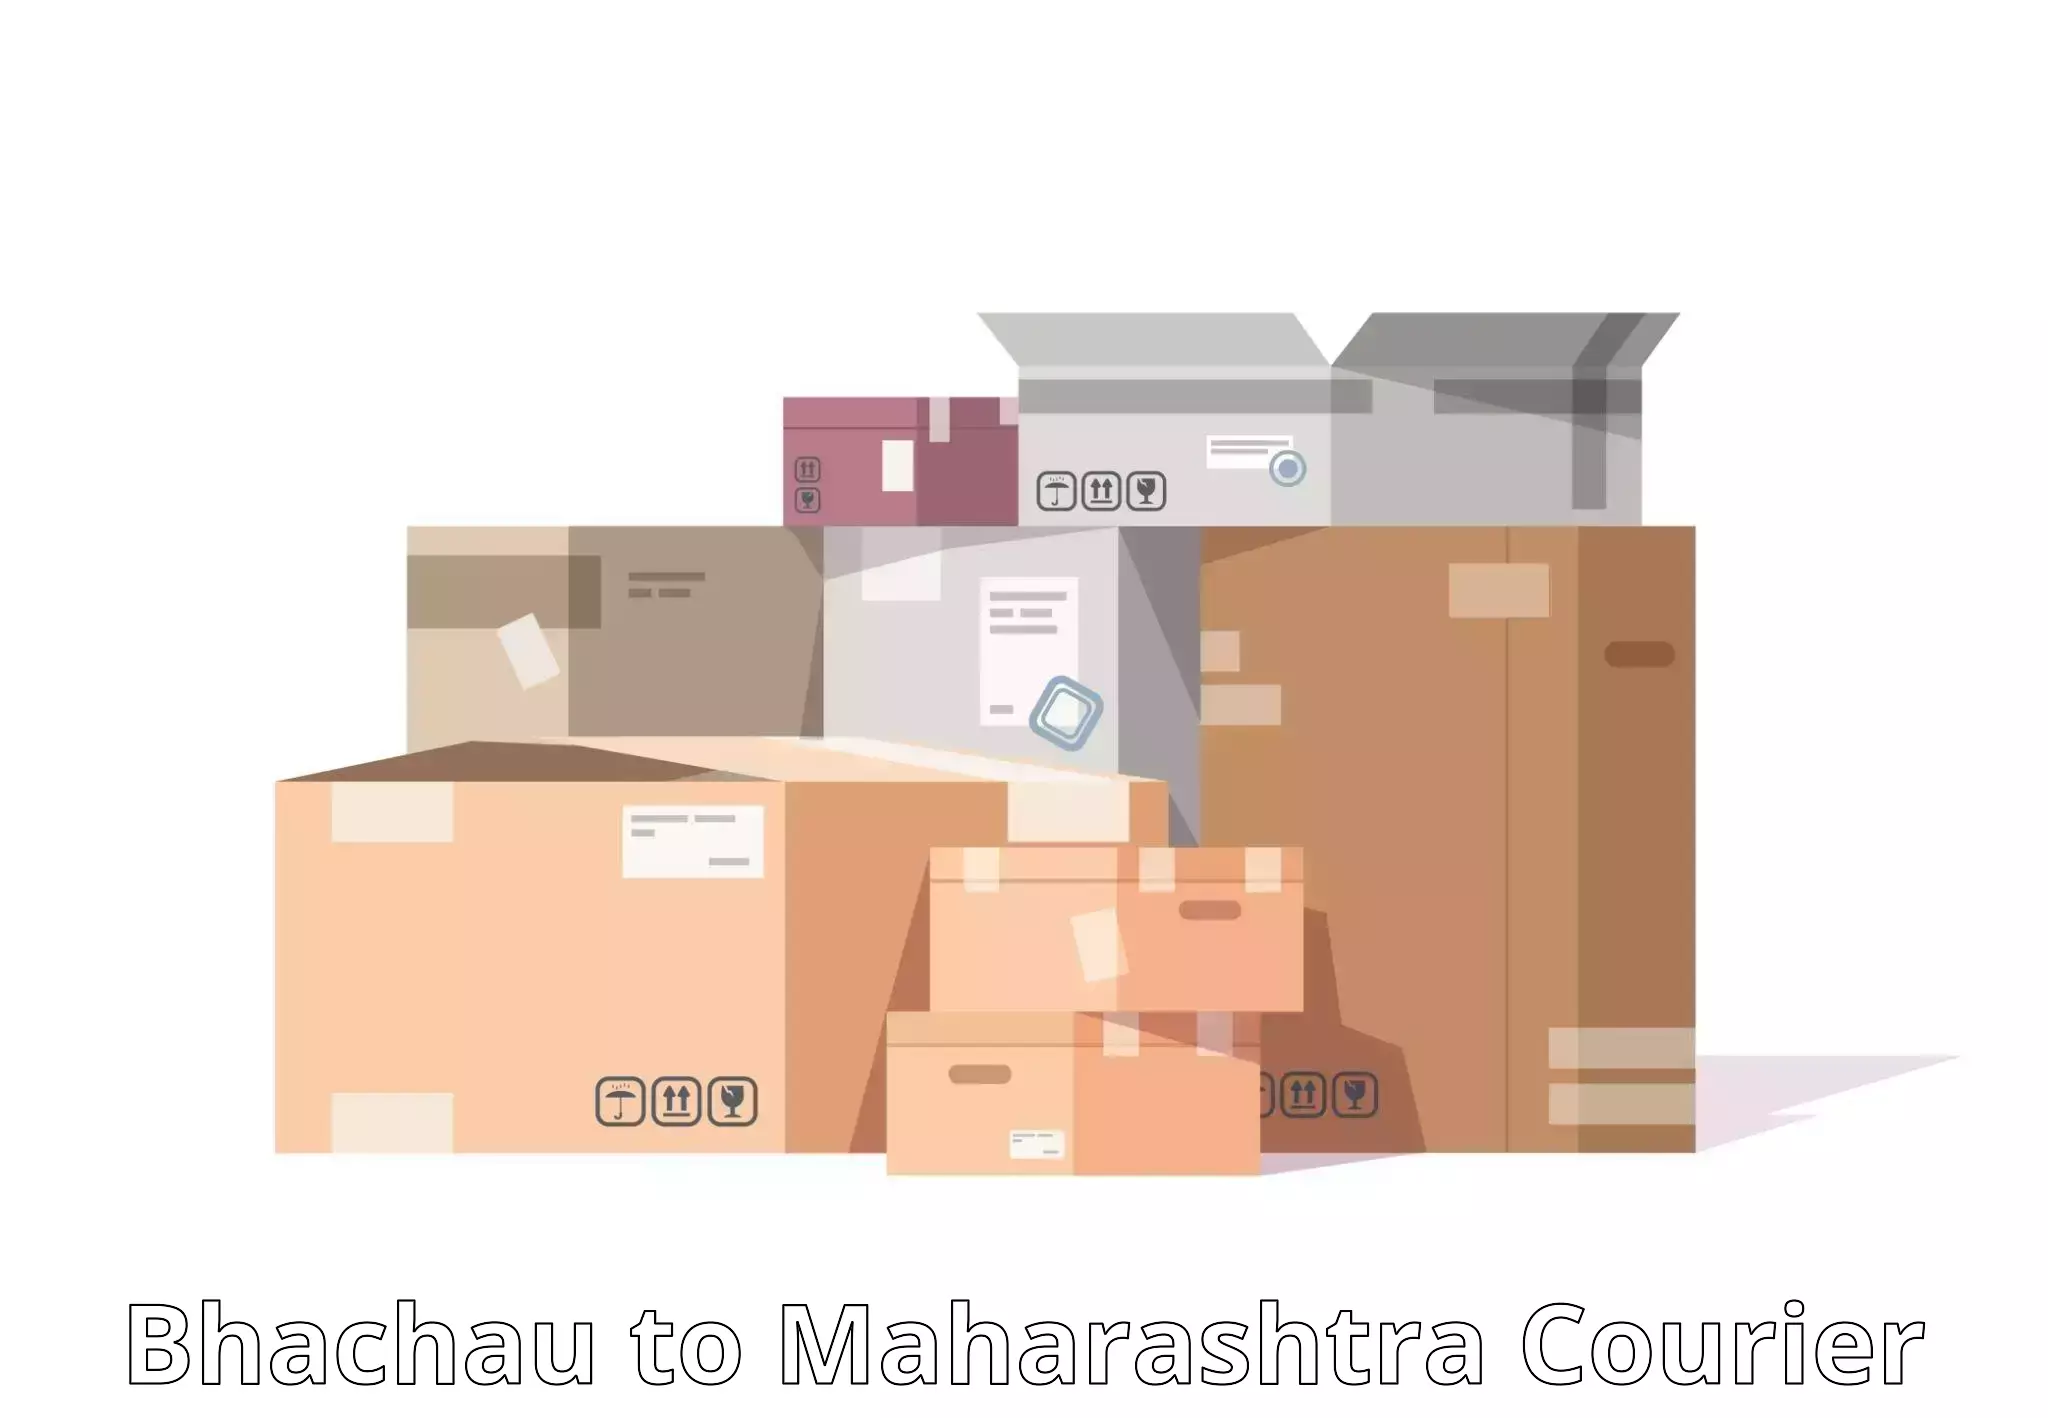 Package delivery network Bhachau to Shrigonda